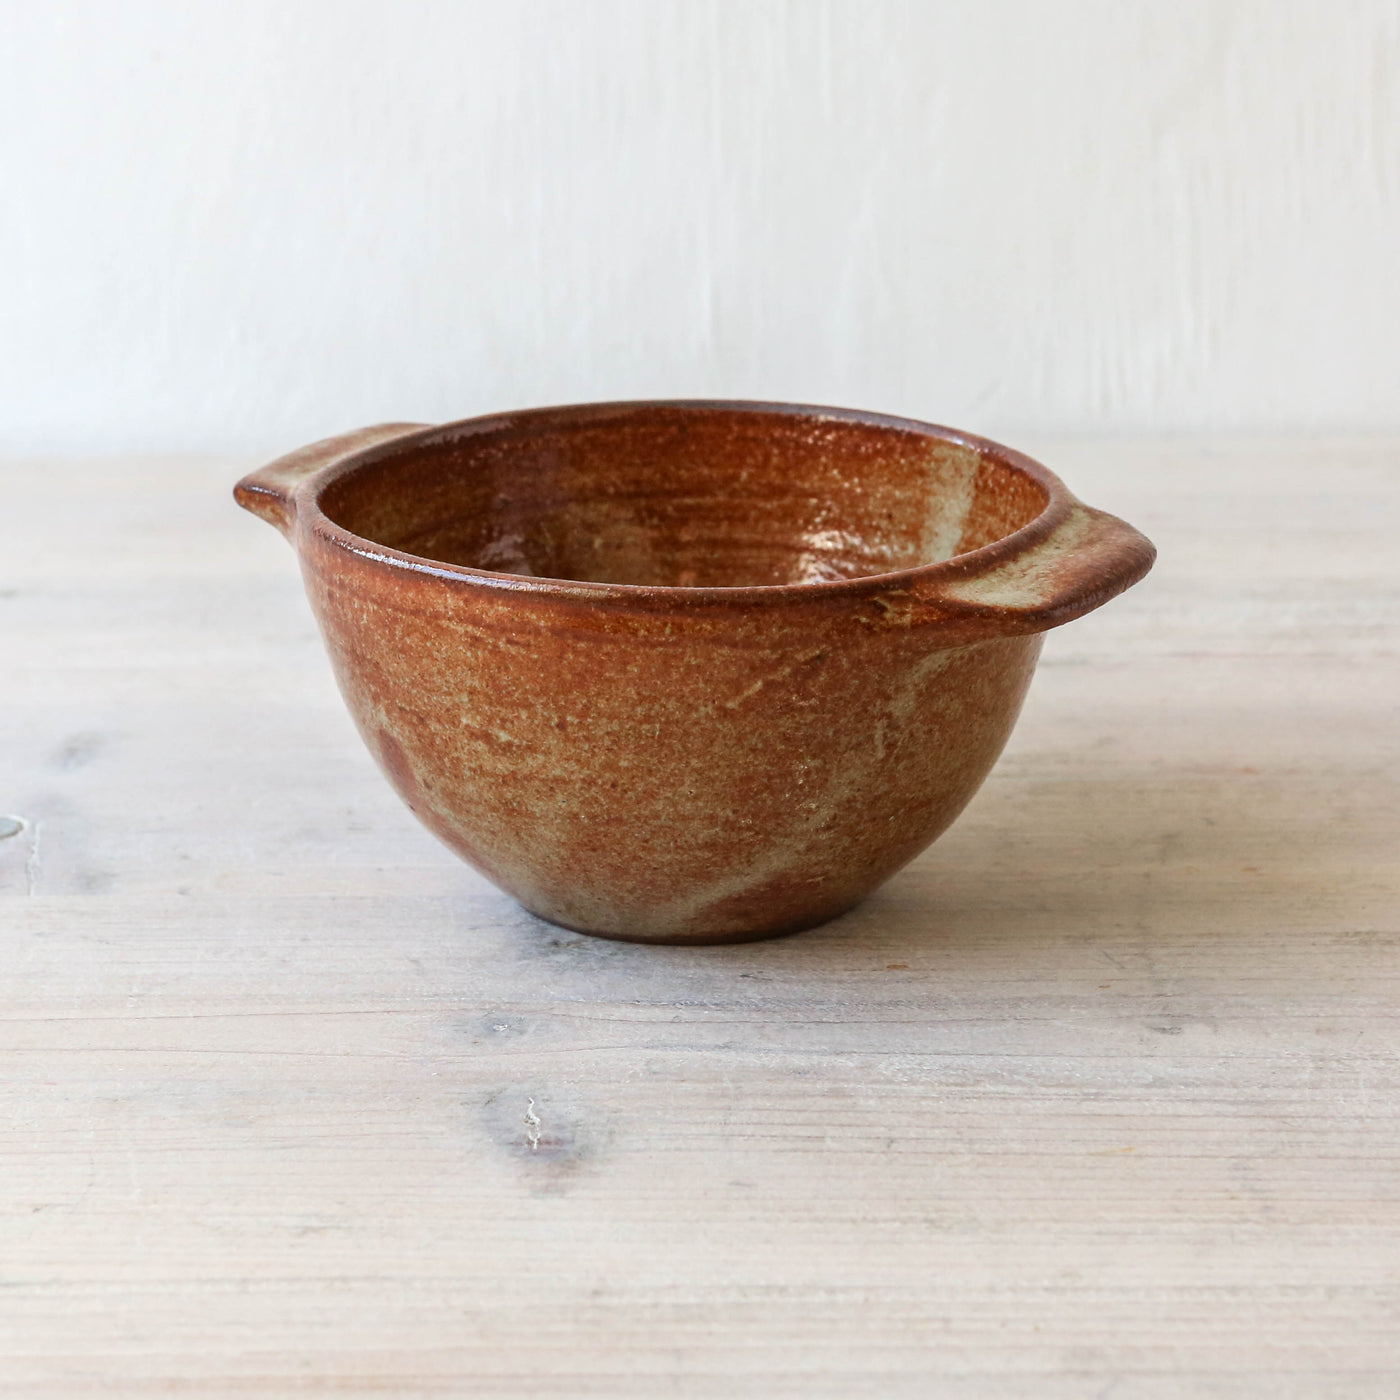 Vintage Stoneware Handled Bowl